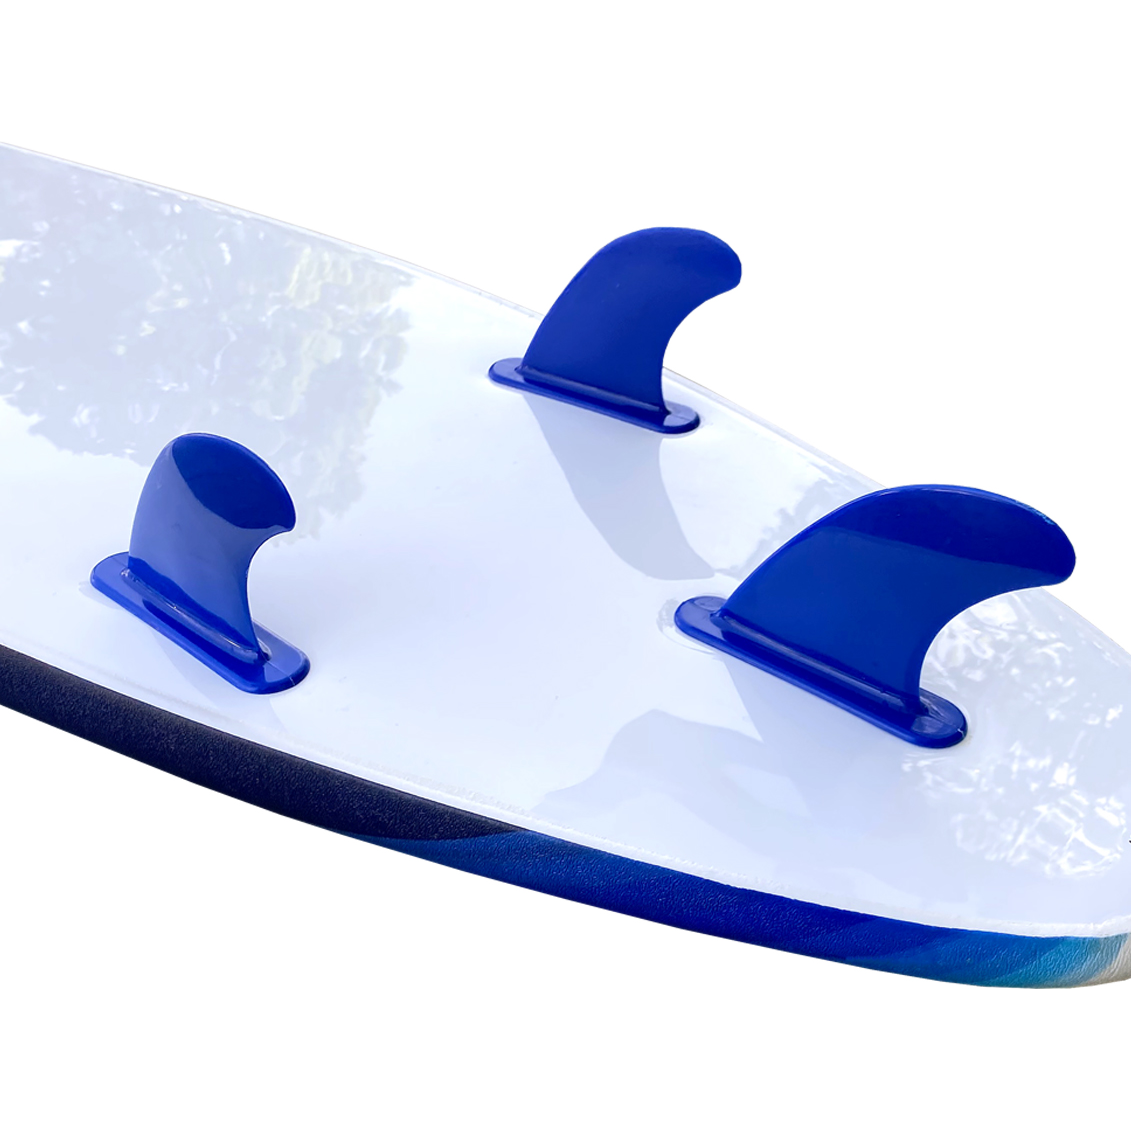 Wavestorm 8'0 Classic Surfboard w/ Leash alternate view